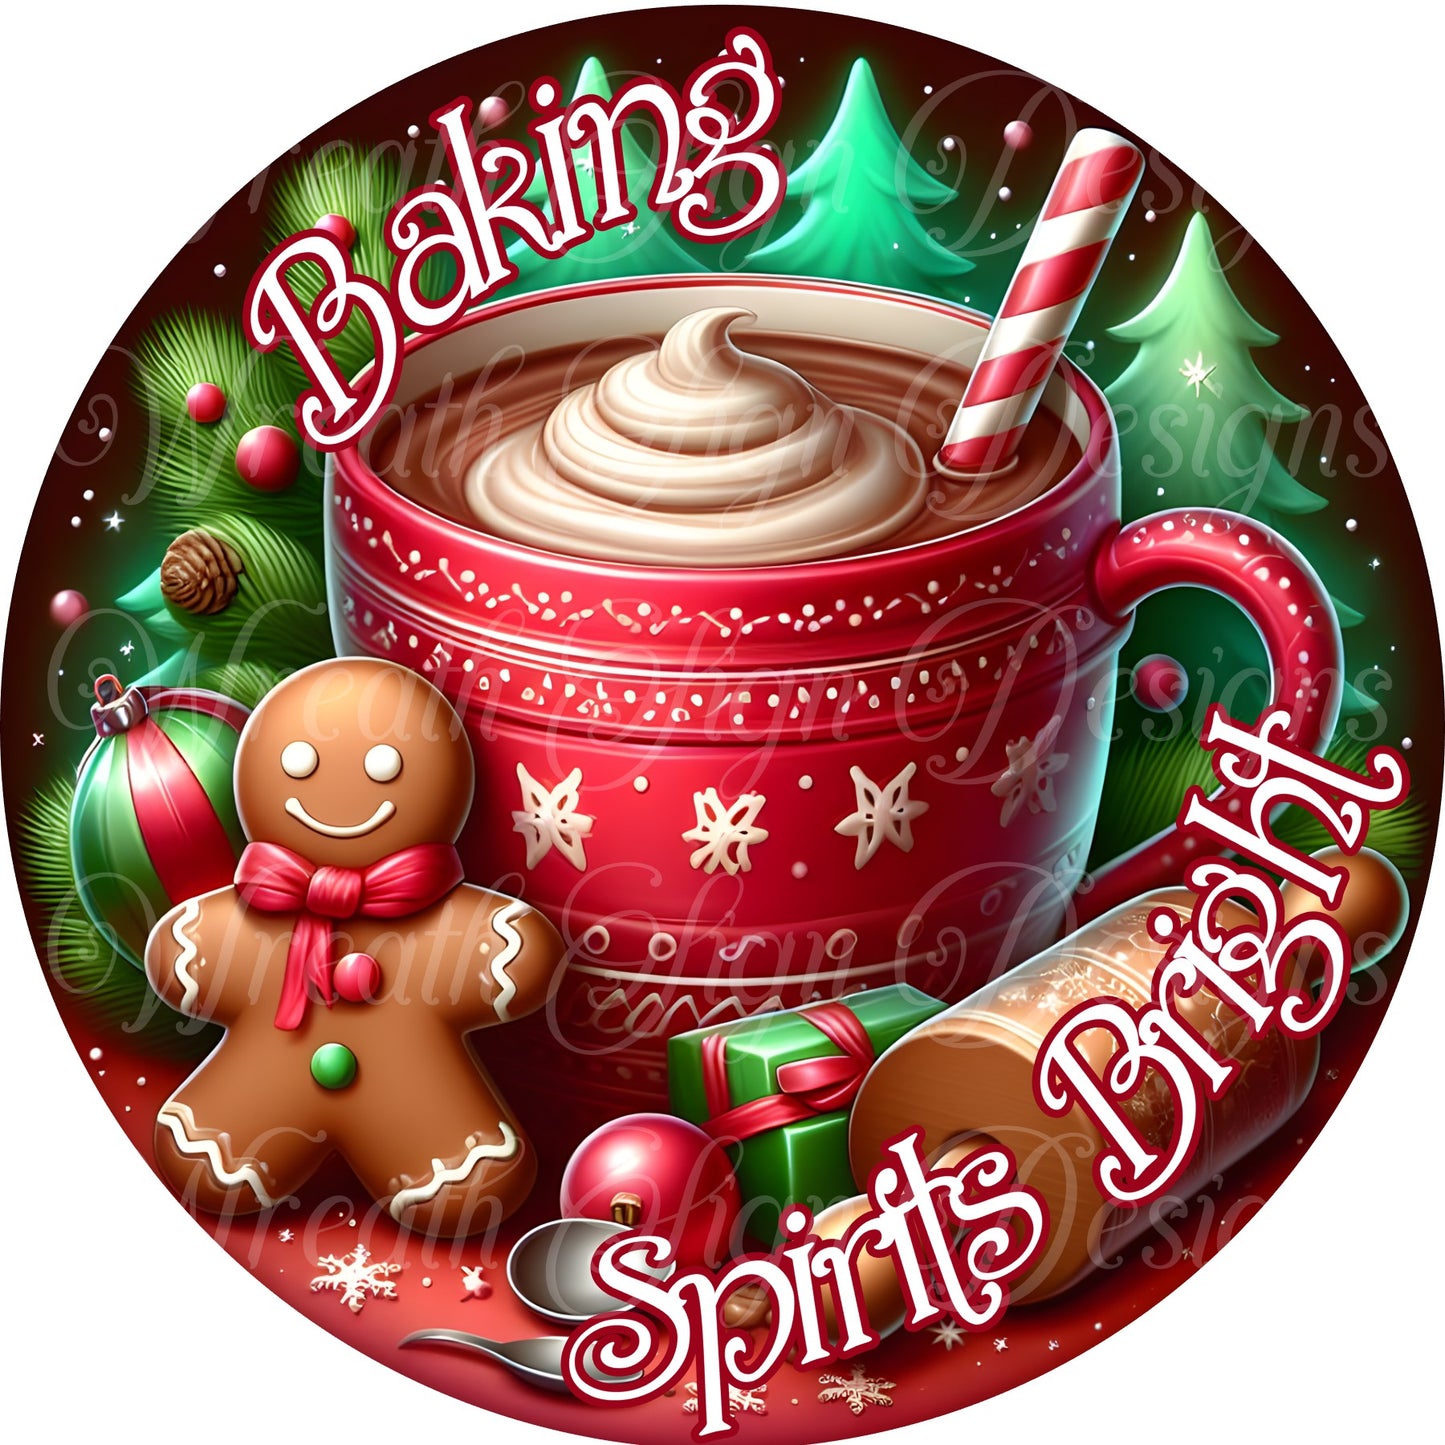 Baking Spirits Bright round metal sign, Santa cookies wreath sign, gingerbread house wreath center, Baking Spirits Bright